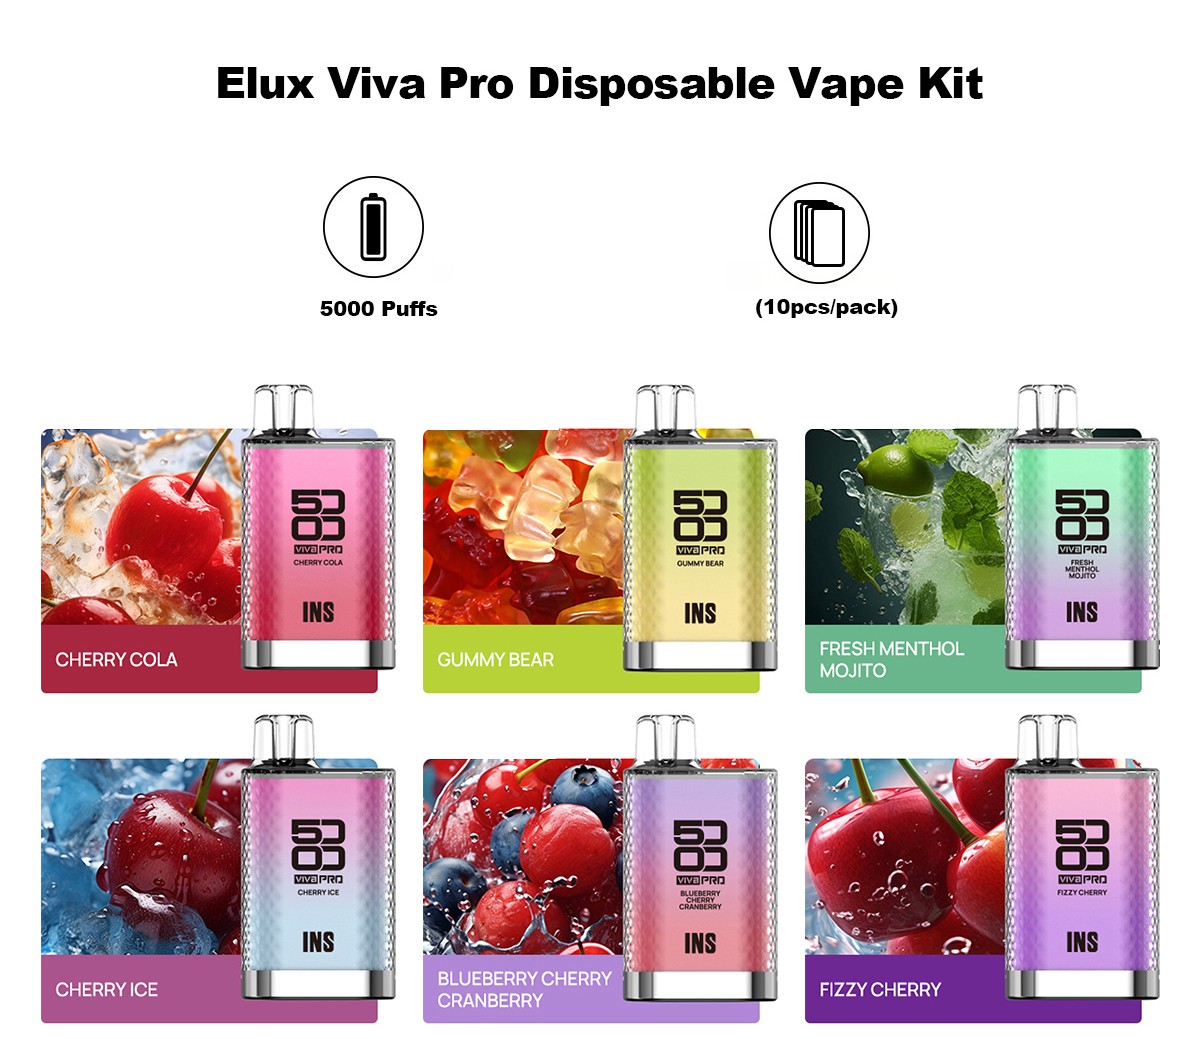 Elux Viva Pro Disposable